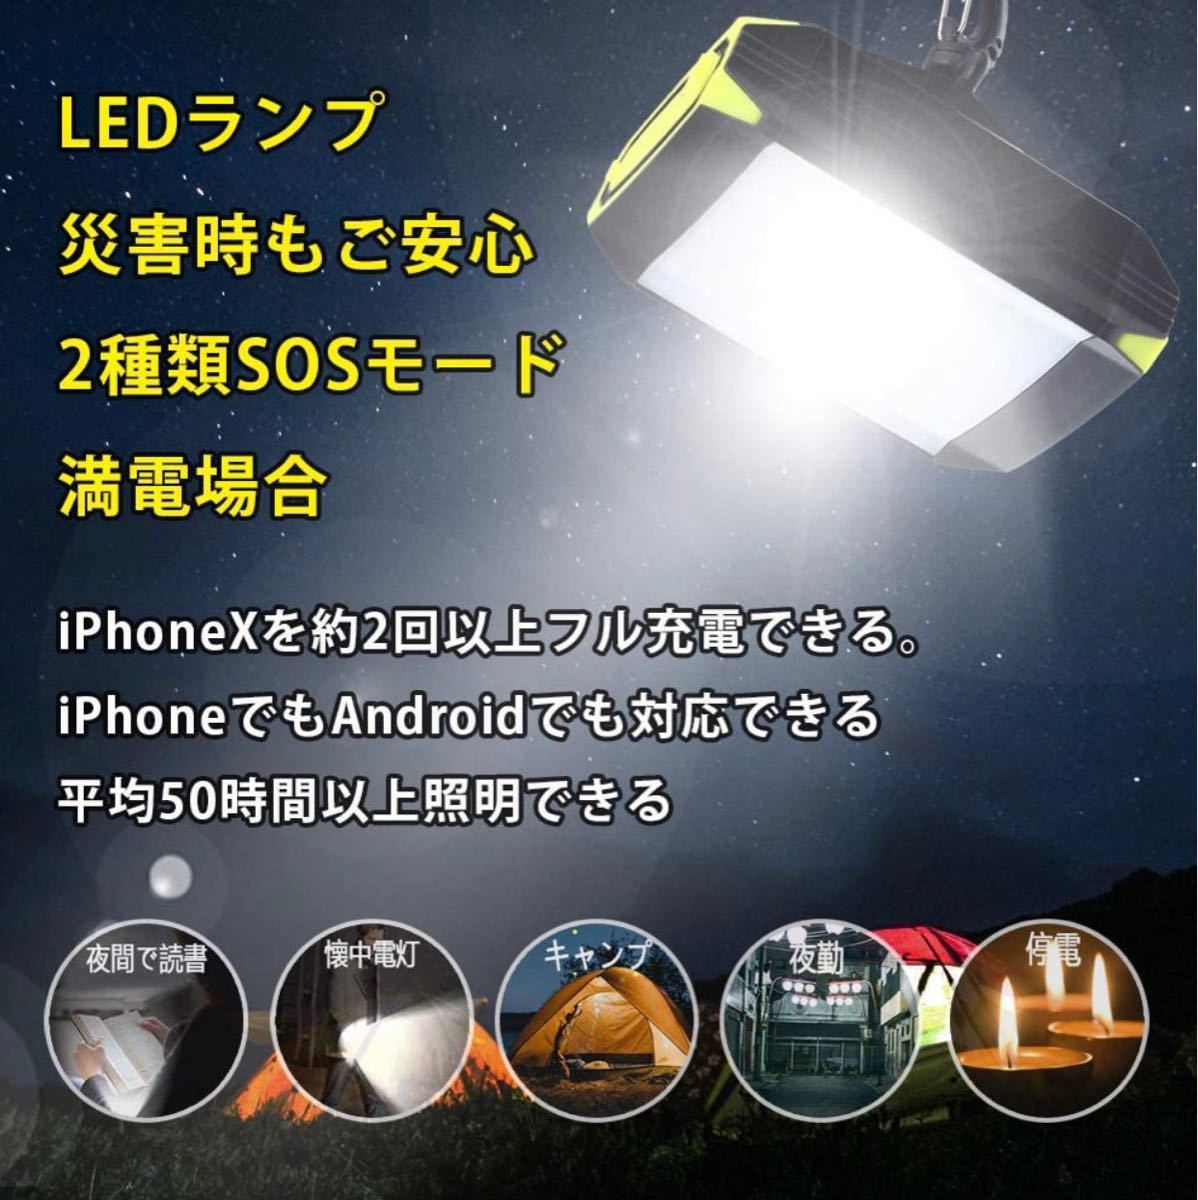 LEDランタン キャンプライト LED投光器 6000mAhモバイルバッテリー 30led 明らかさ3段調整 2種類SOSモード